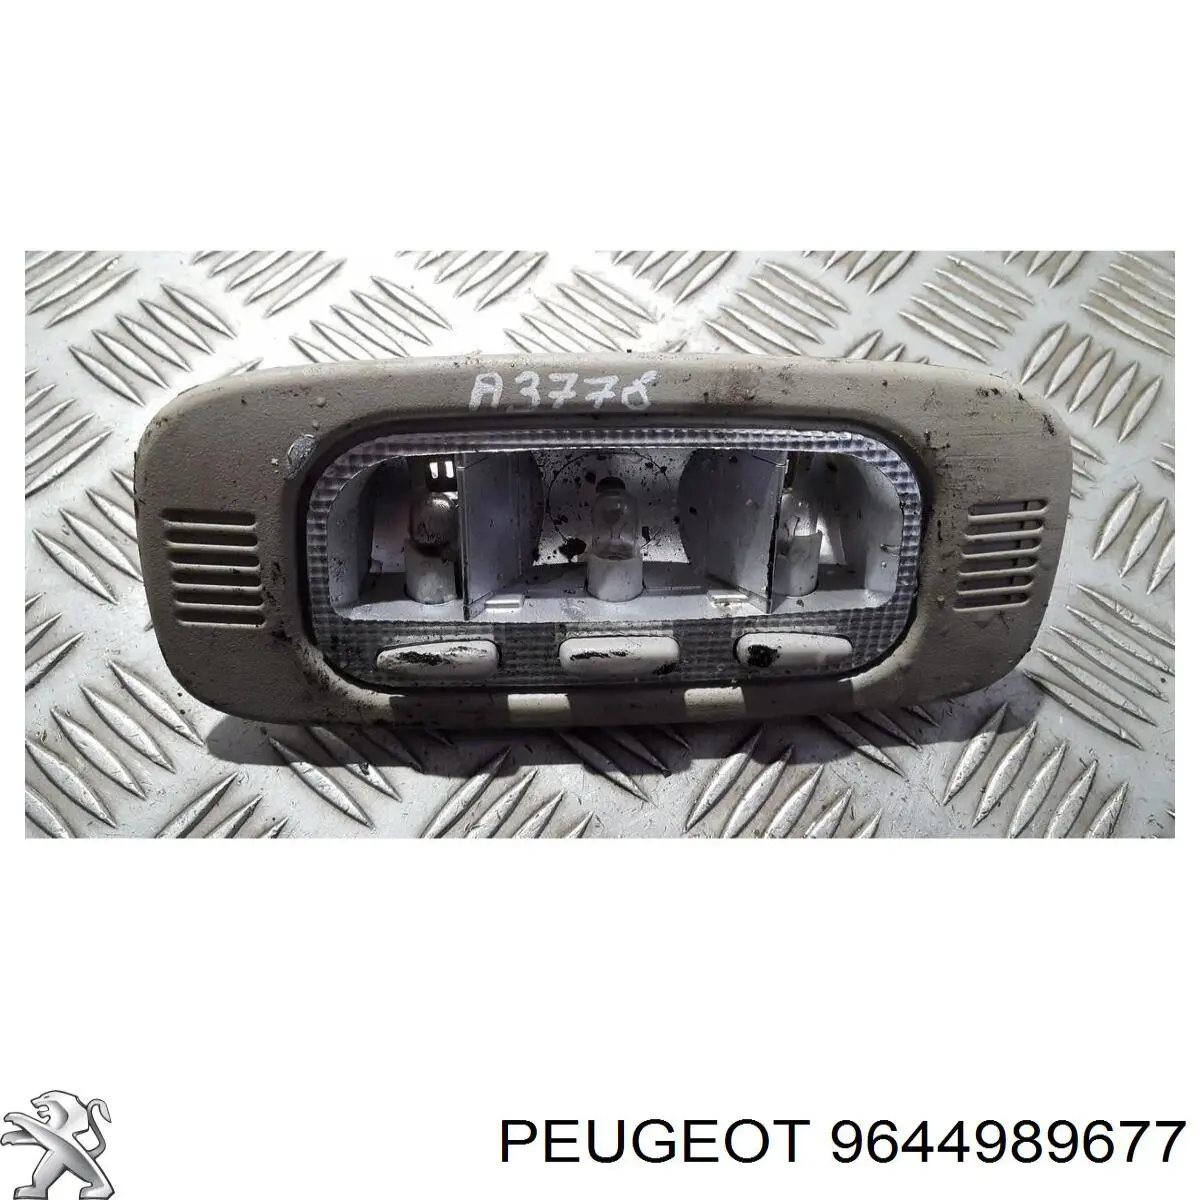 9644989677 Peugeot/Citroen